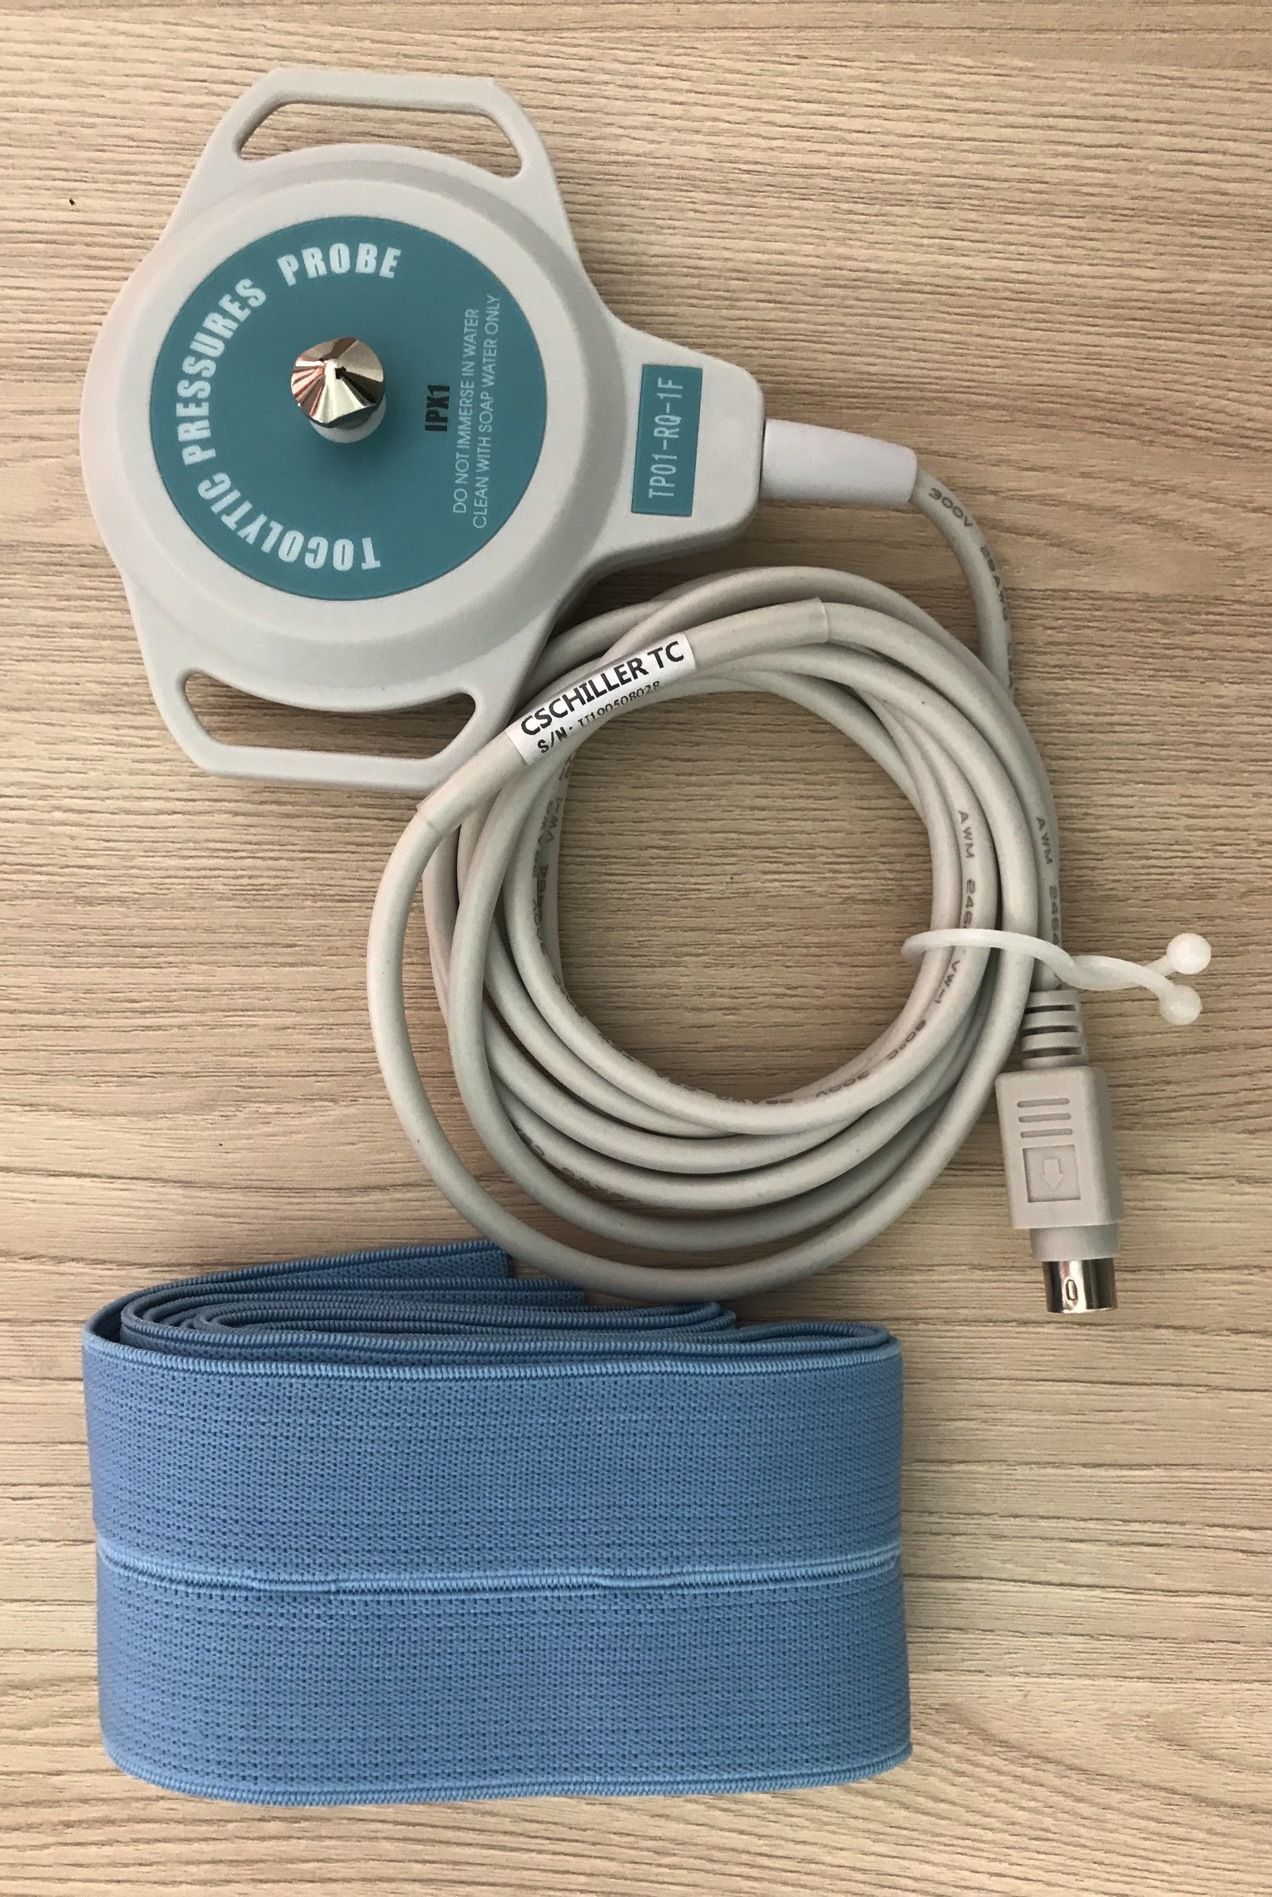 Toco Transducer probe for NST Monitor Monitor Fetal Monitor Schiller Argus_สายโพรบโตโคทรานส์ดิวเซอร์โพรบสำหรับเครื่องบันทึกการบีบตัวของมดลูก และอัตราการเต้นของหัวใจทารกในครรภ์ Schiller รุ่น Argus